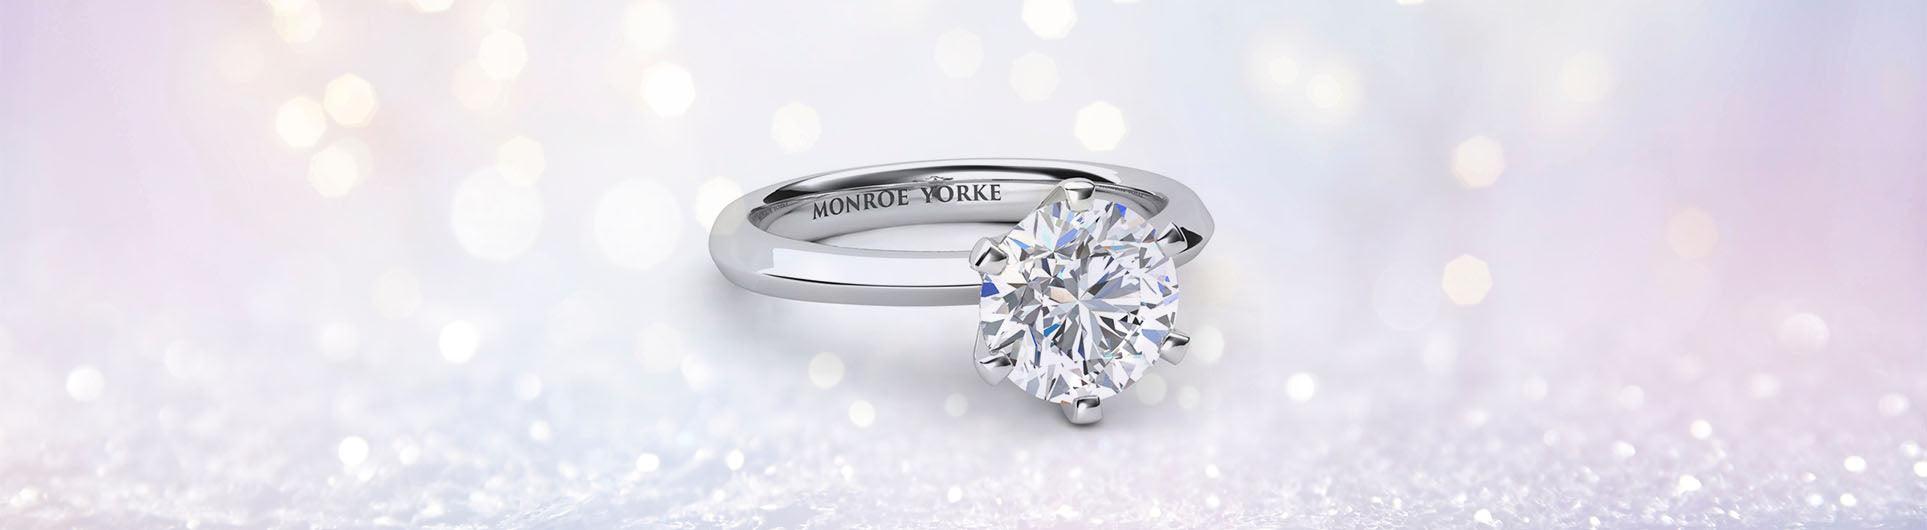 Engagement Rings on SALE - Monroe Yorke Diamonds